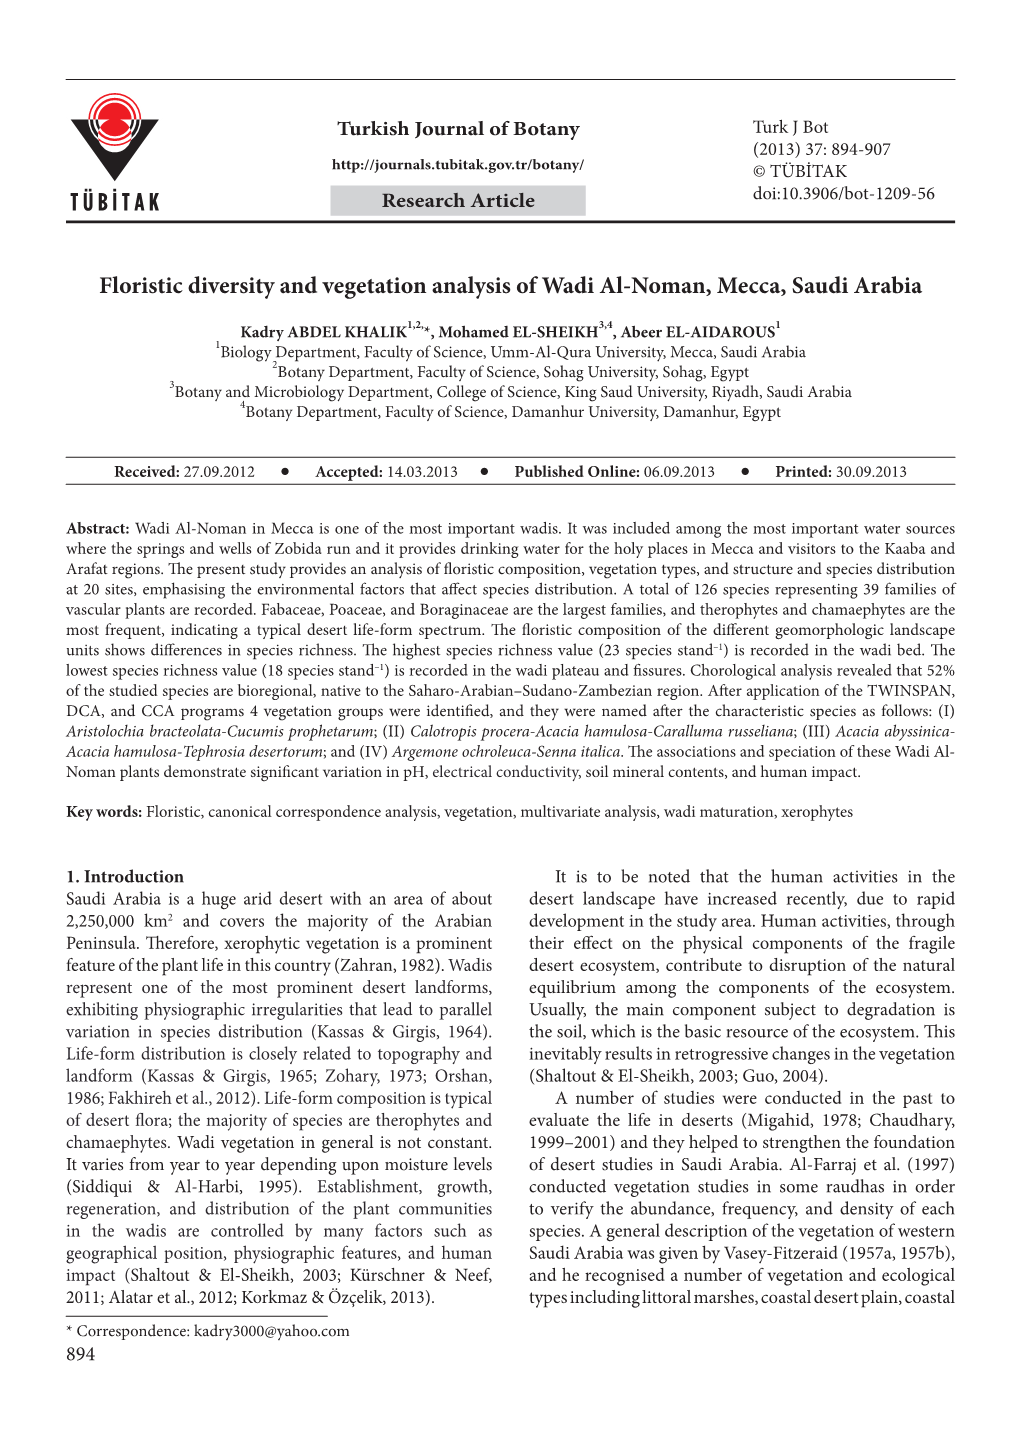 Floristic Diversity and Vegetation Analysis of Wadi Al-Noman, Mecca, Saudi Arabia